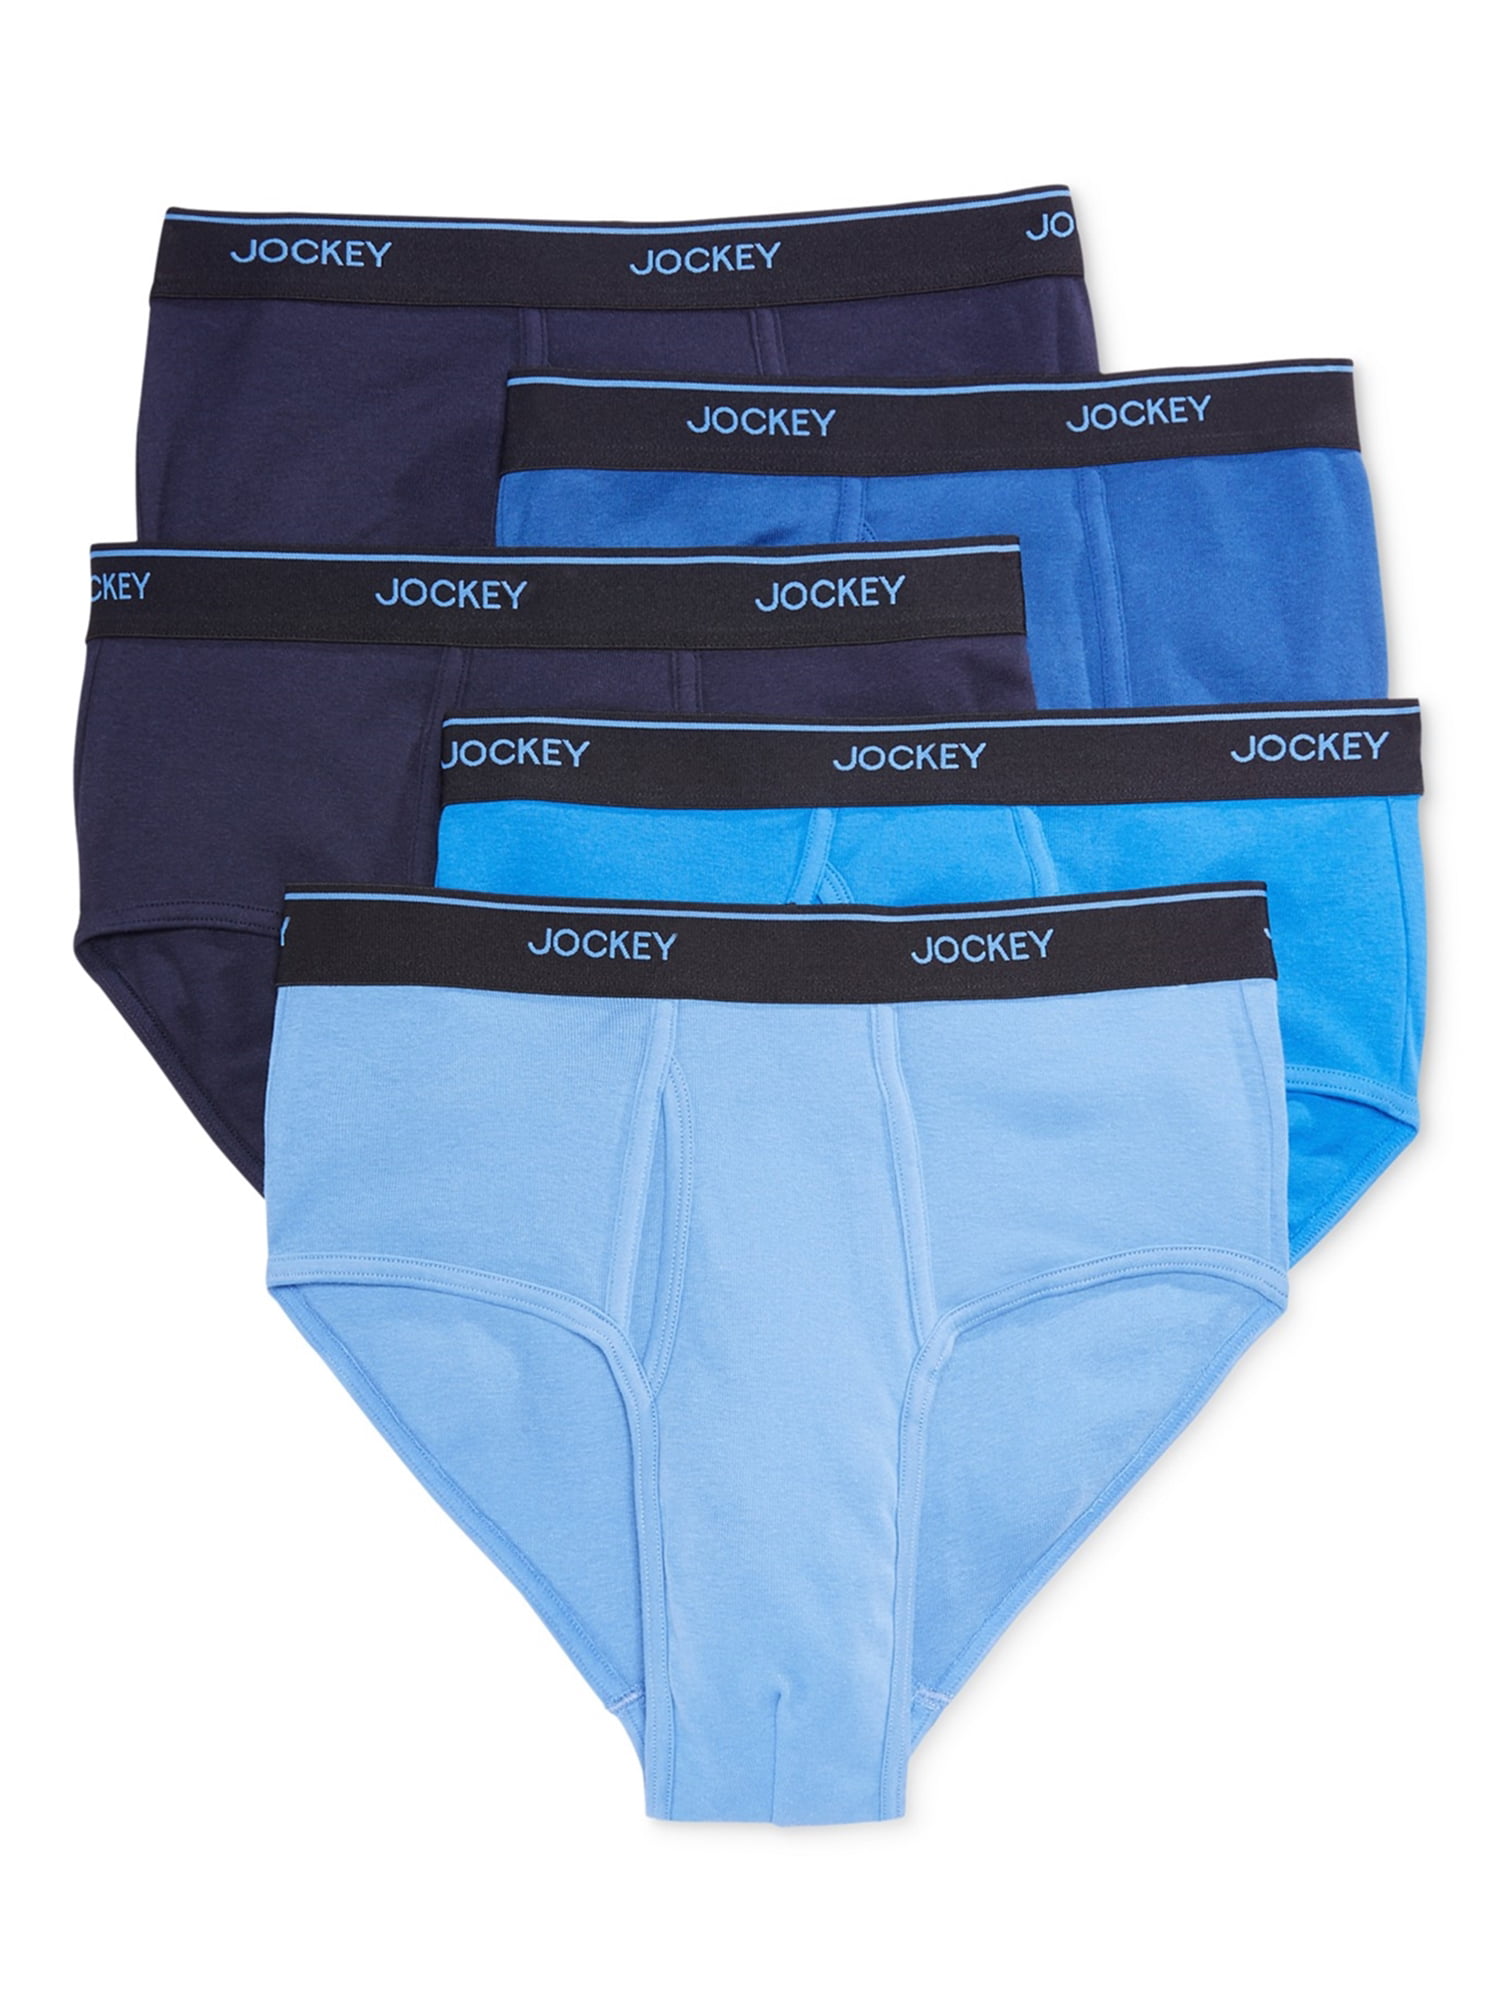 Jockey - Jockey Mens 4+1pk Stay Cool Underwear Briefs - Walmart.com Do You Wear Underwear With A Football Girdle